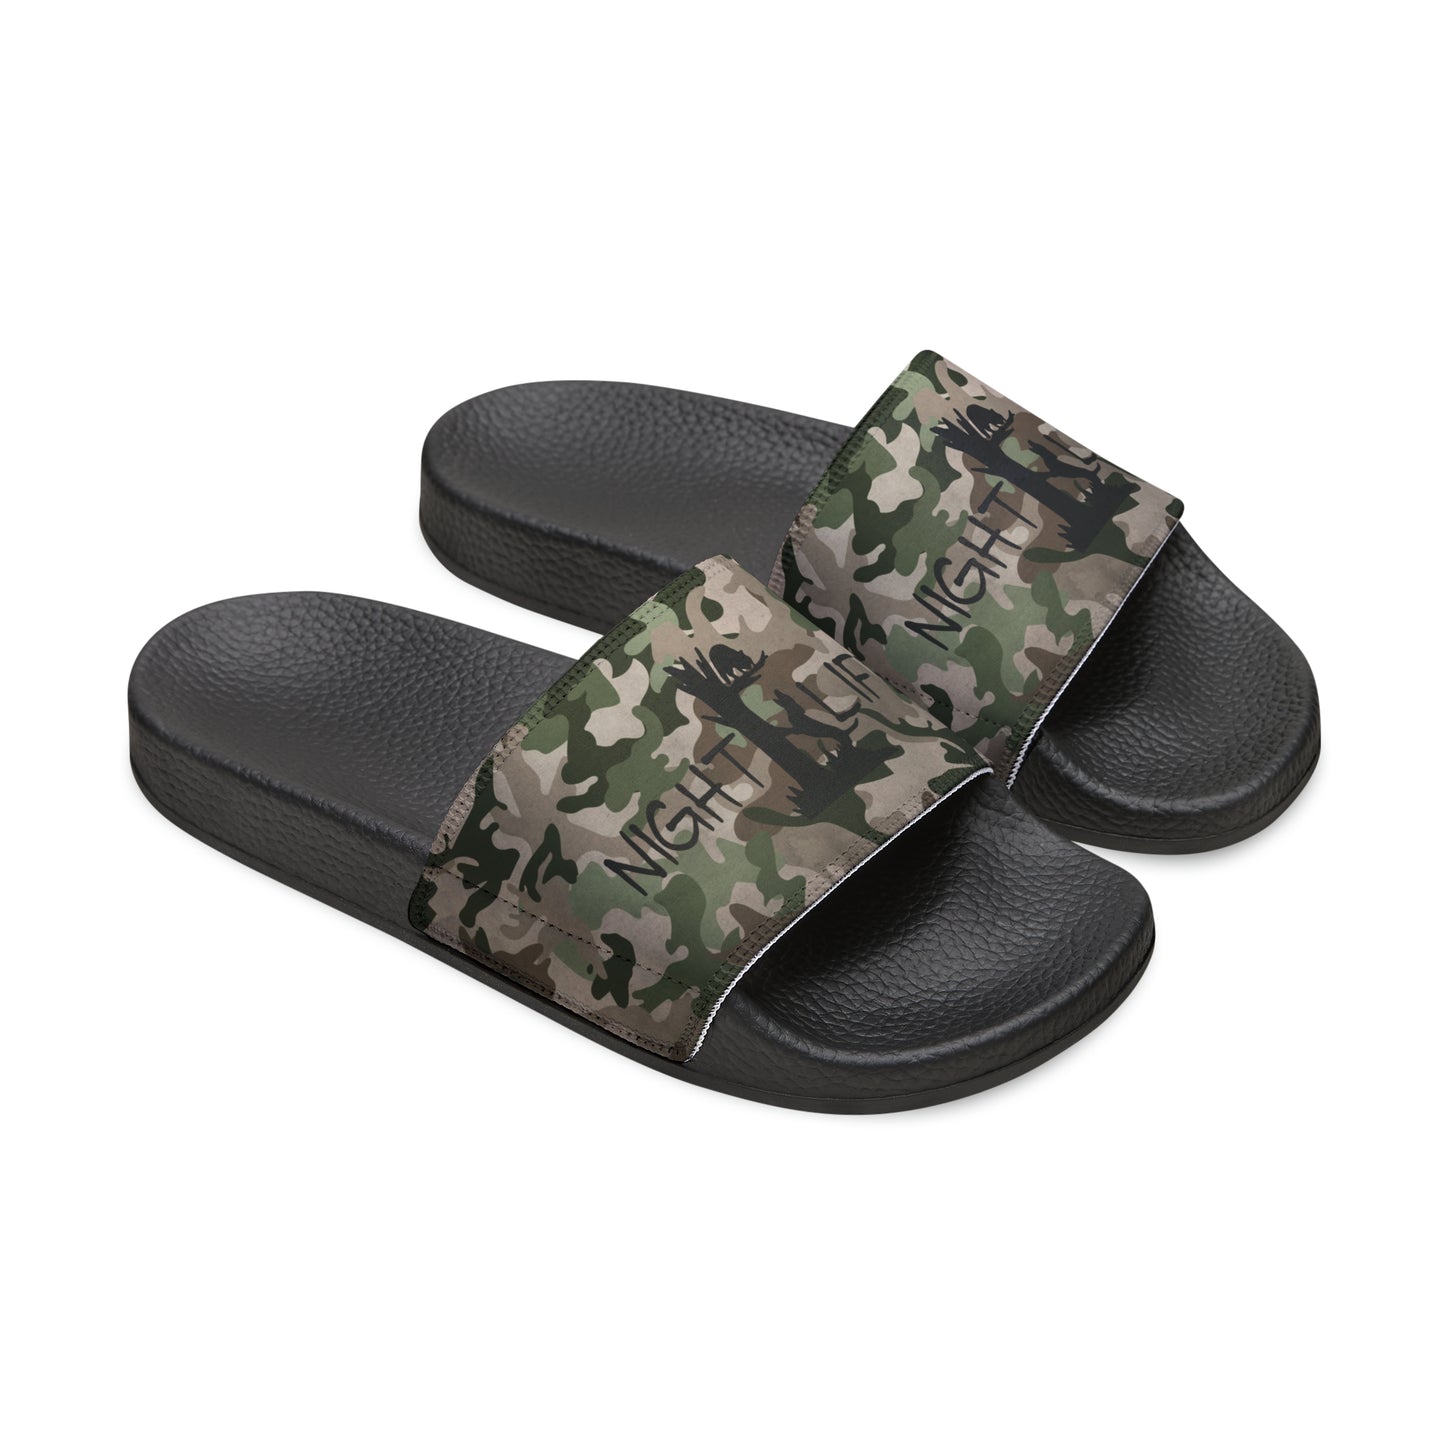 Men's Camo Night Life Coon Hunting Slide Sandals